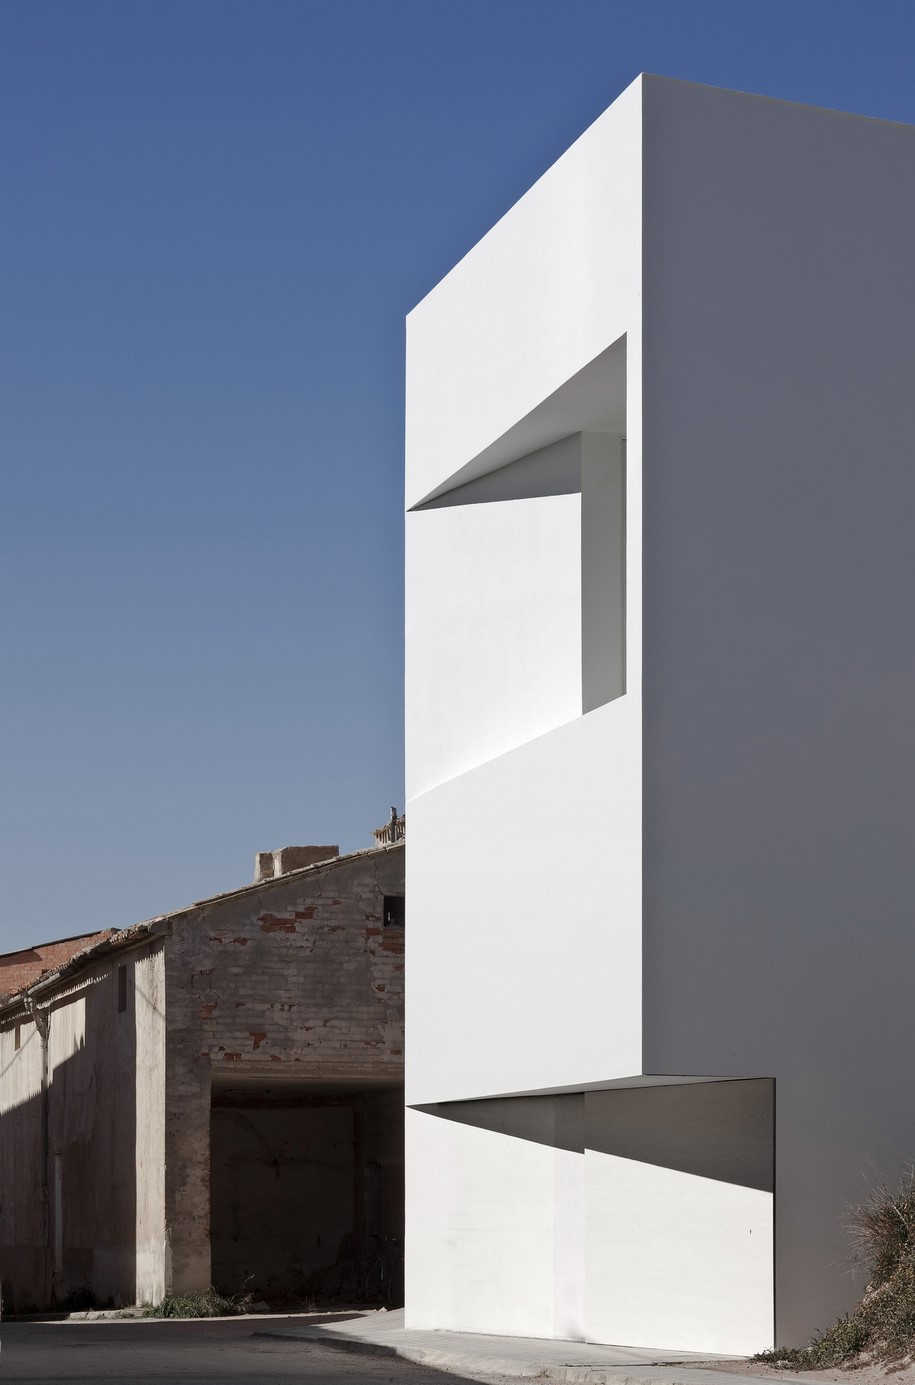 Fran Silvestre Arquitectos, CASA EN LA LADERA DE UN CASTILLO, HOUSE ON MOUNTAINSIDE OVERLOOKED BY CASTLE, house, mountain, Ayora, Valencia, Spain, spanish architecture